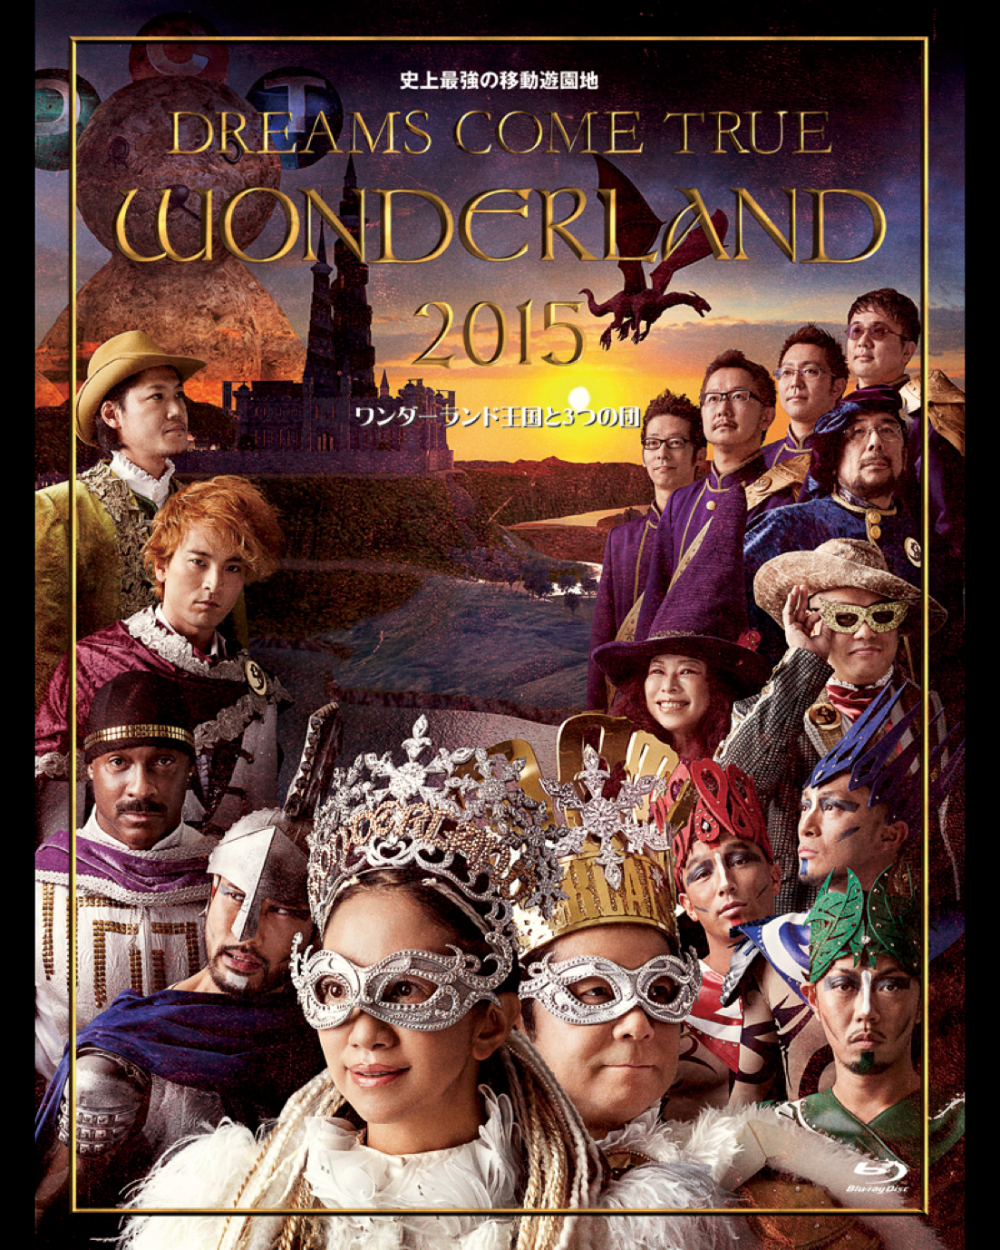 DREAMS COME TRUE【Blu-ray】史上最強の移動遊園地 DREAMS COME TRUE WONDERLAND 2015 ワンダーランド王国と3つの団